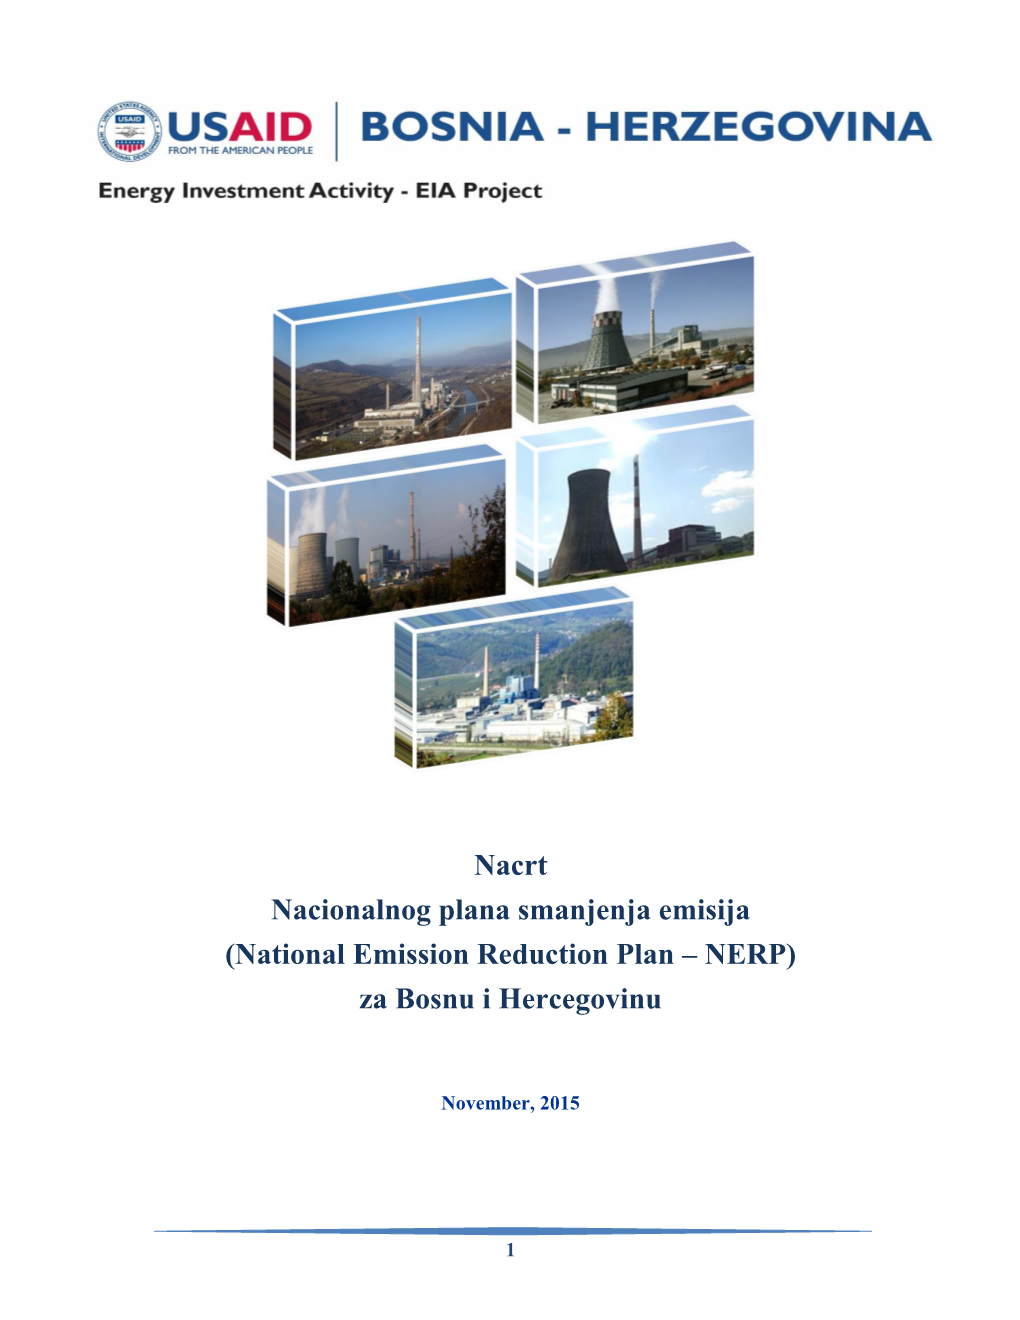 (National Emission Reduction Plan – NERP) Za Bosnu I Hercegovinu